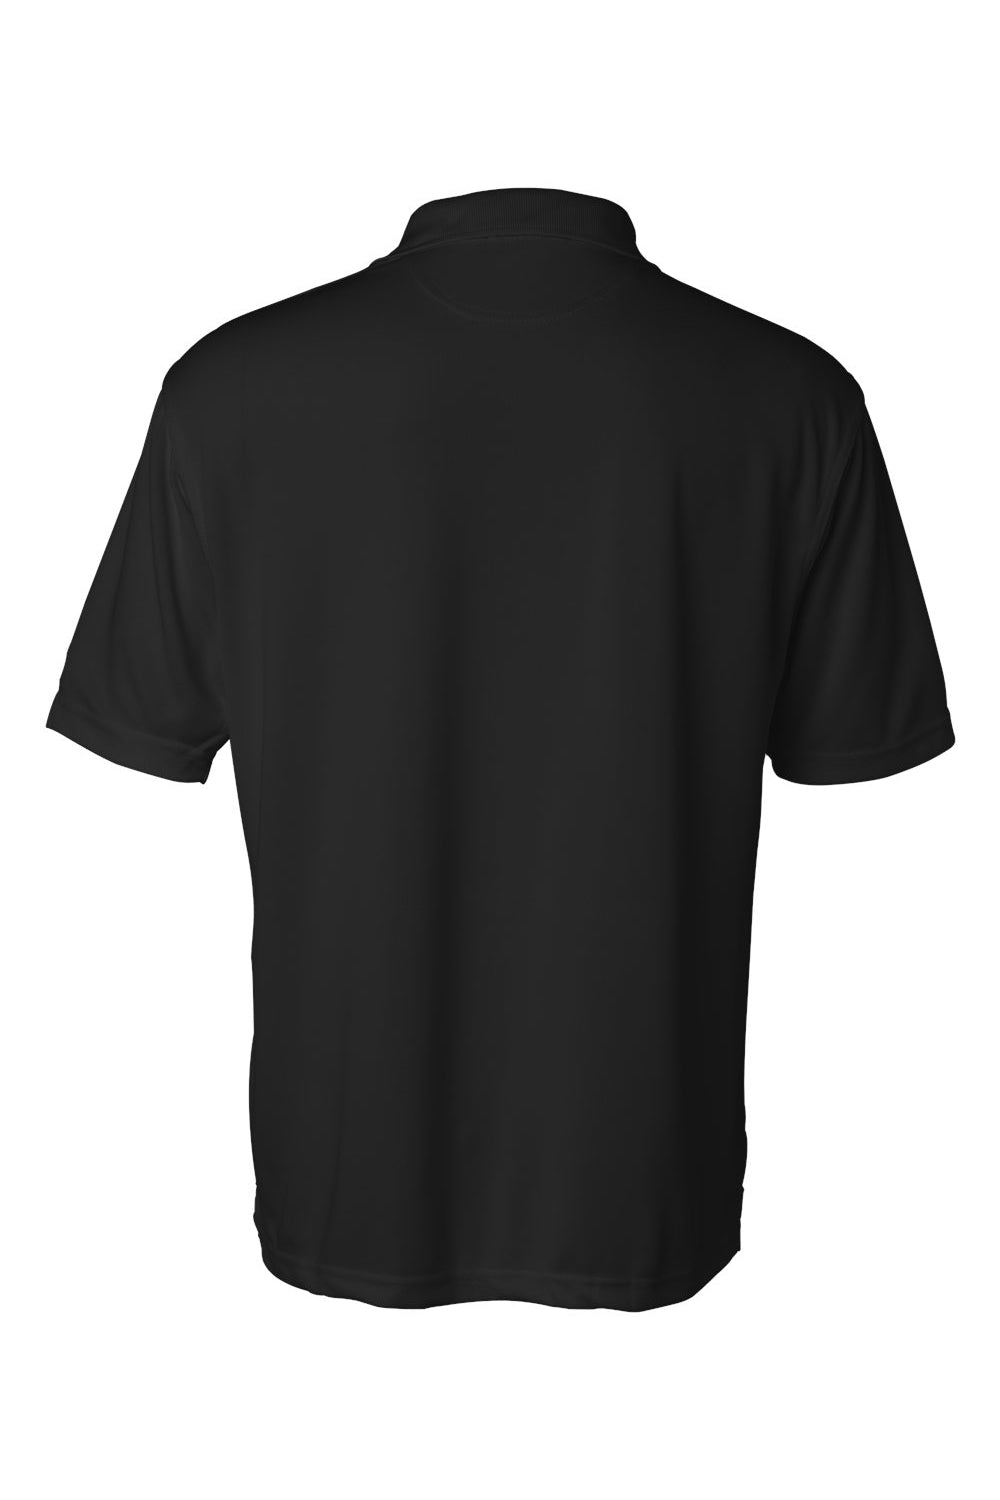 Sierra Pacific 0469 Mens Moisture Wish Mesh Short Sleeve Polo Shirt Black Flat Back